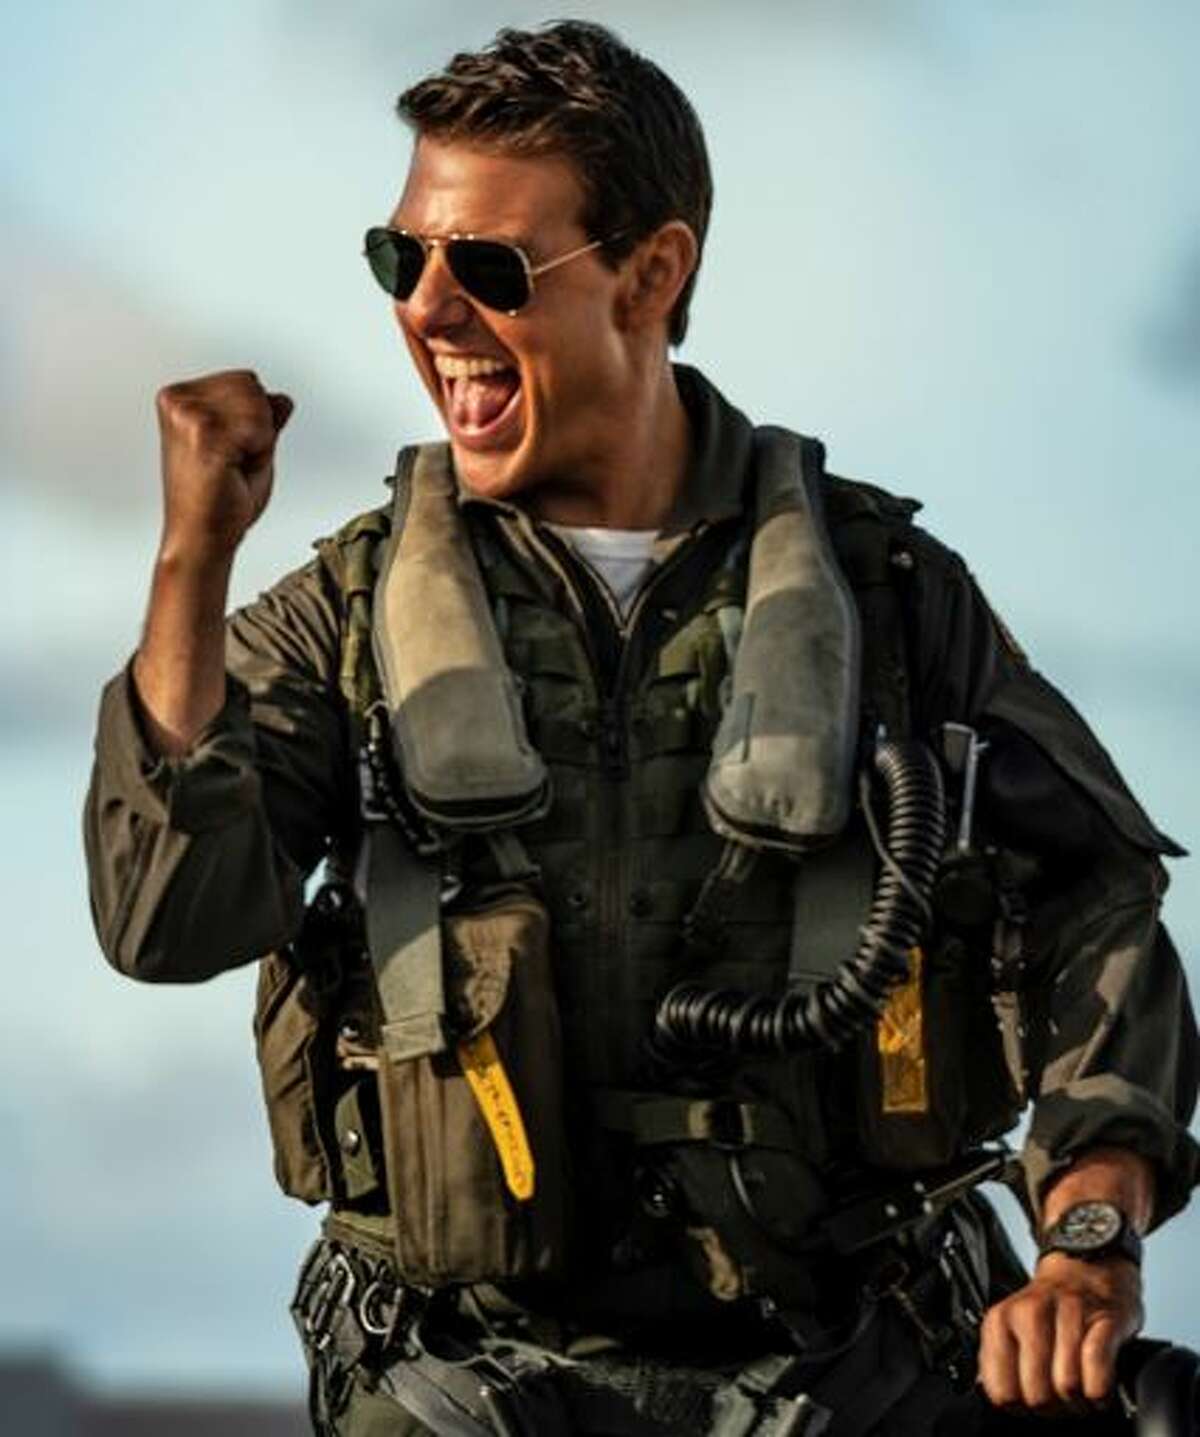 Tom Cruise as Capt. Pete "Maverick" Mitchell in "Top Gun: Maverick."  